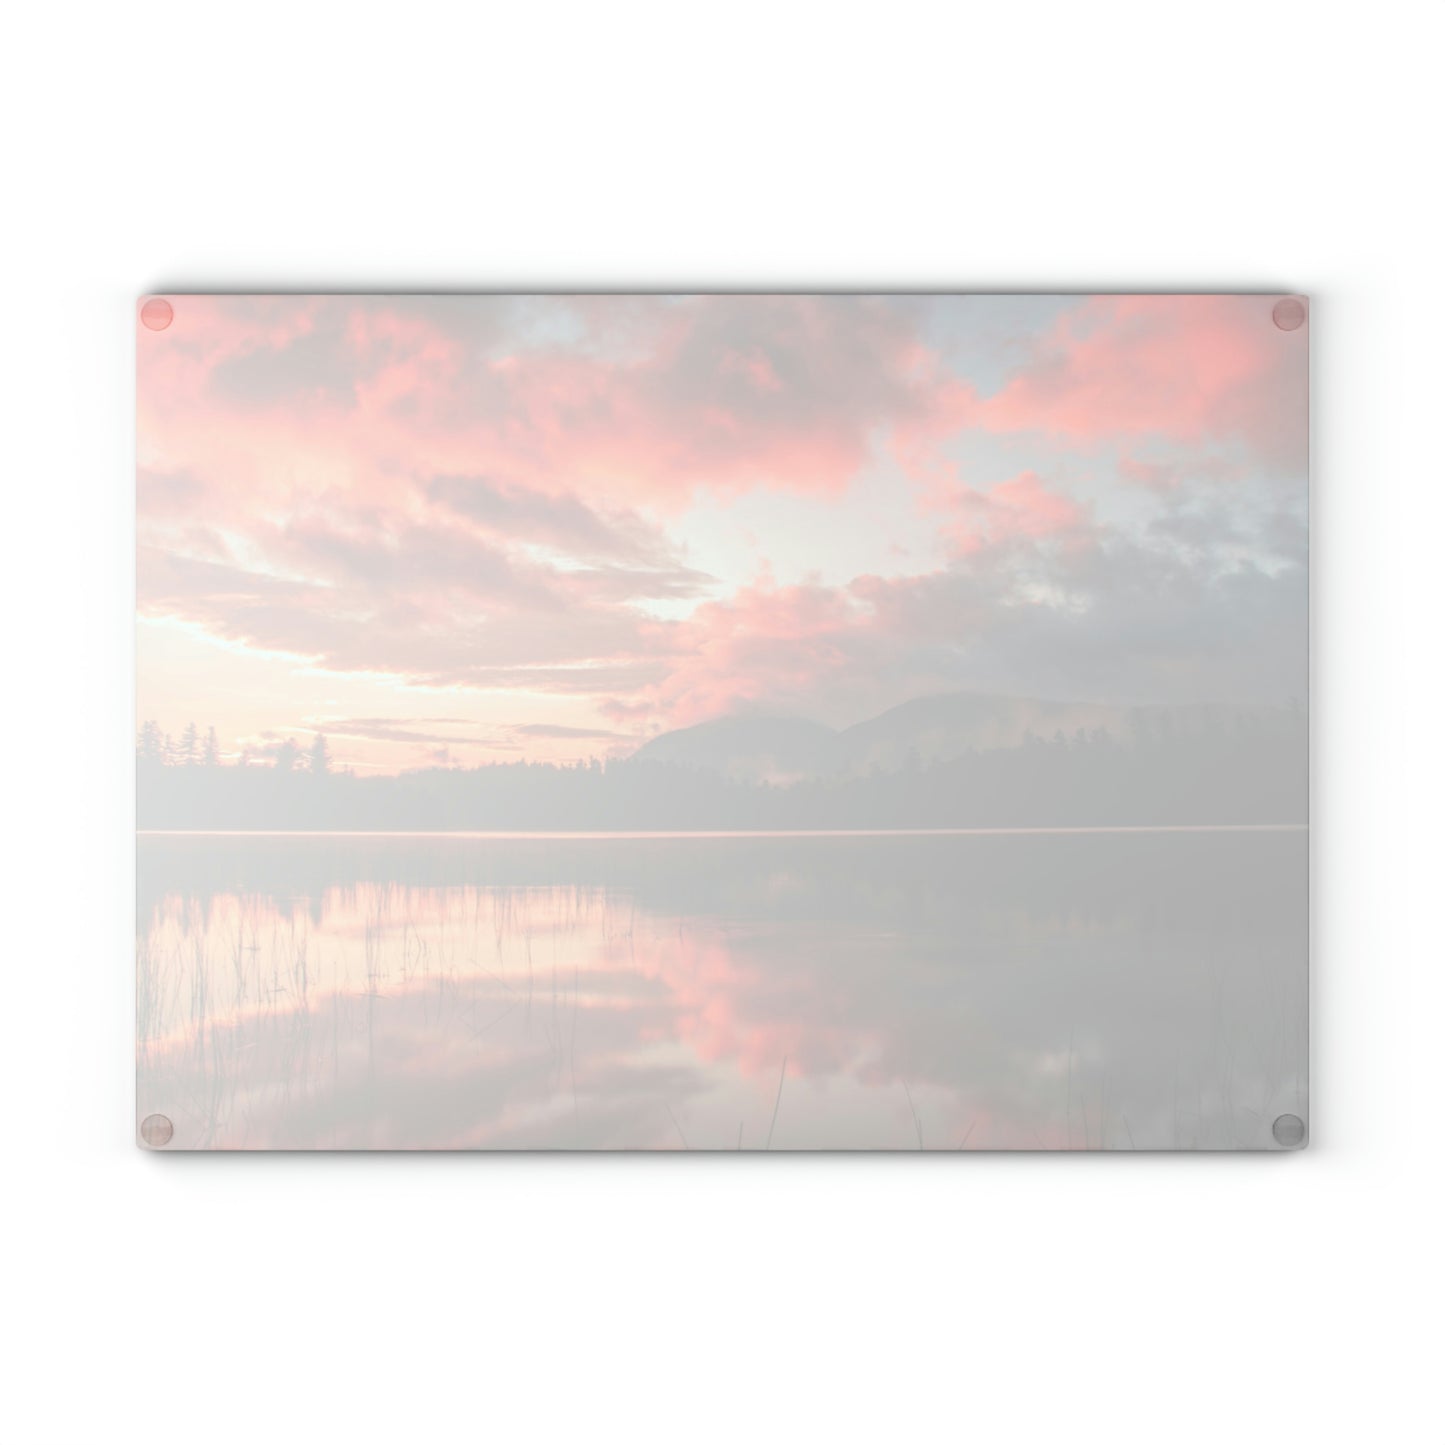 Glass Cutting Board - Connery Pond Sunrise